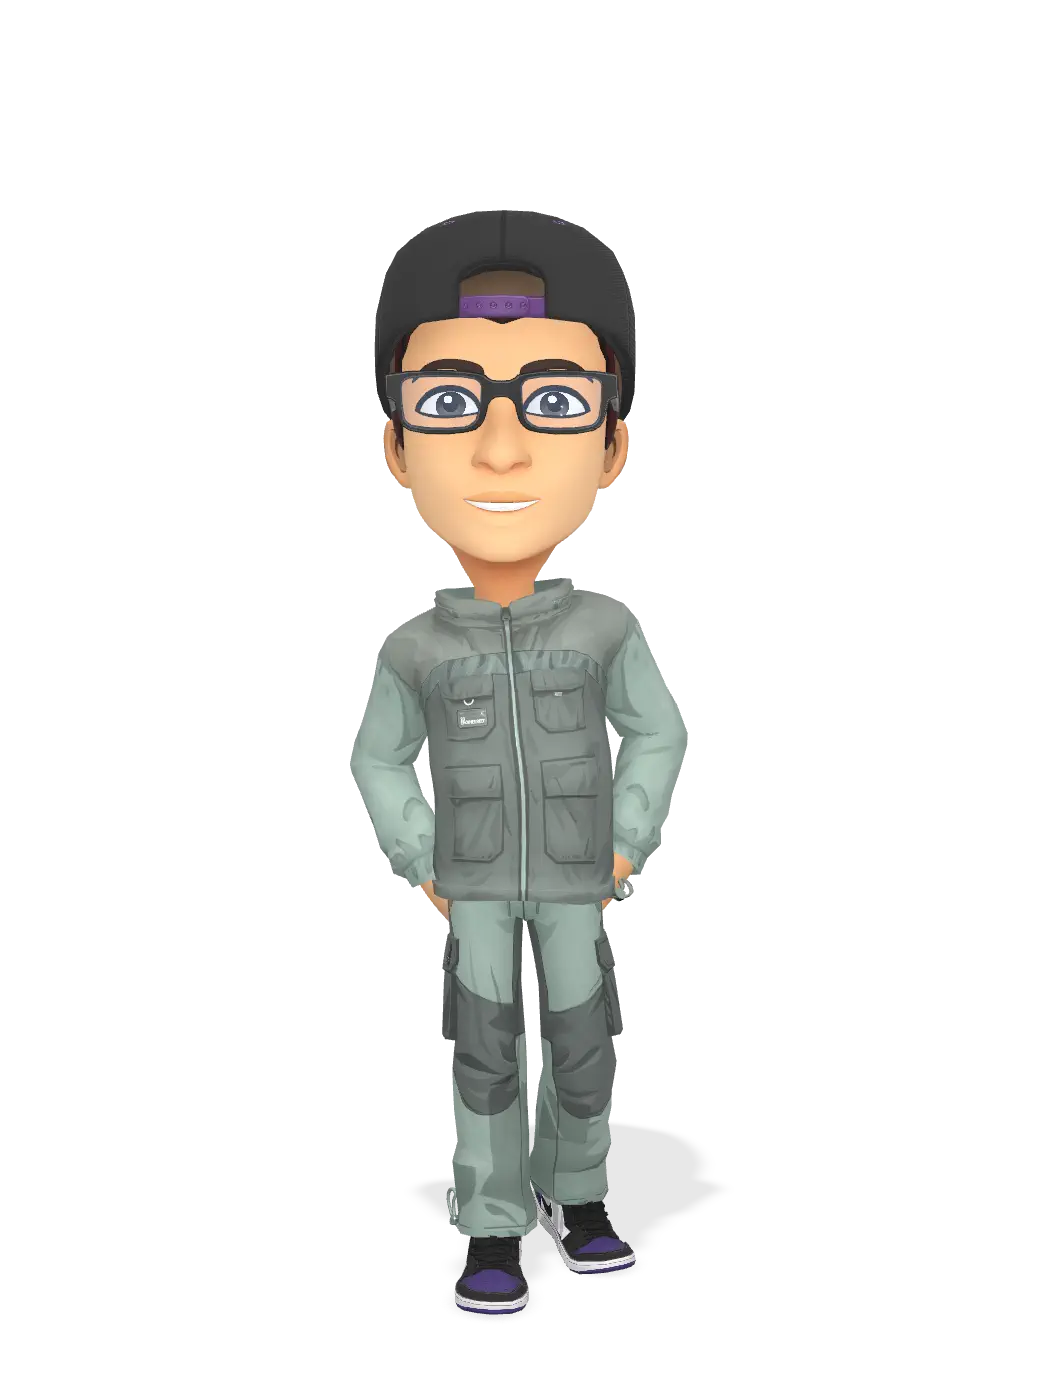 3D Bitmoji for jbrandys2000 avatar